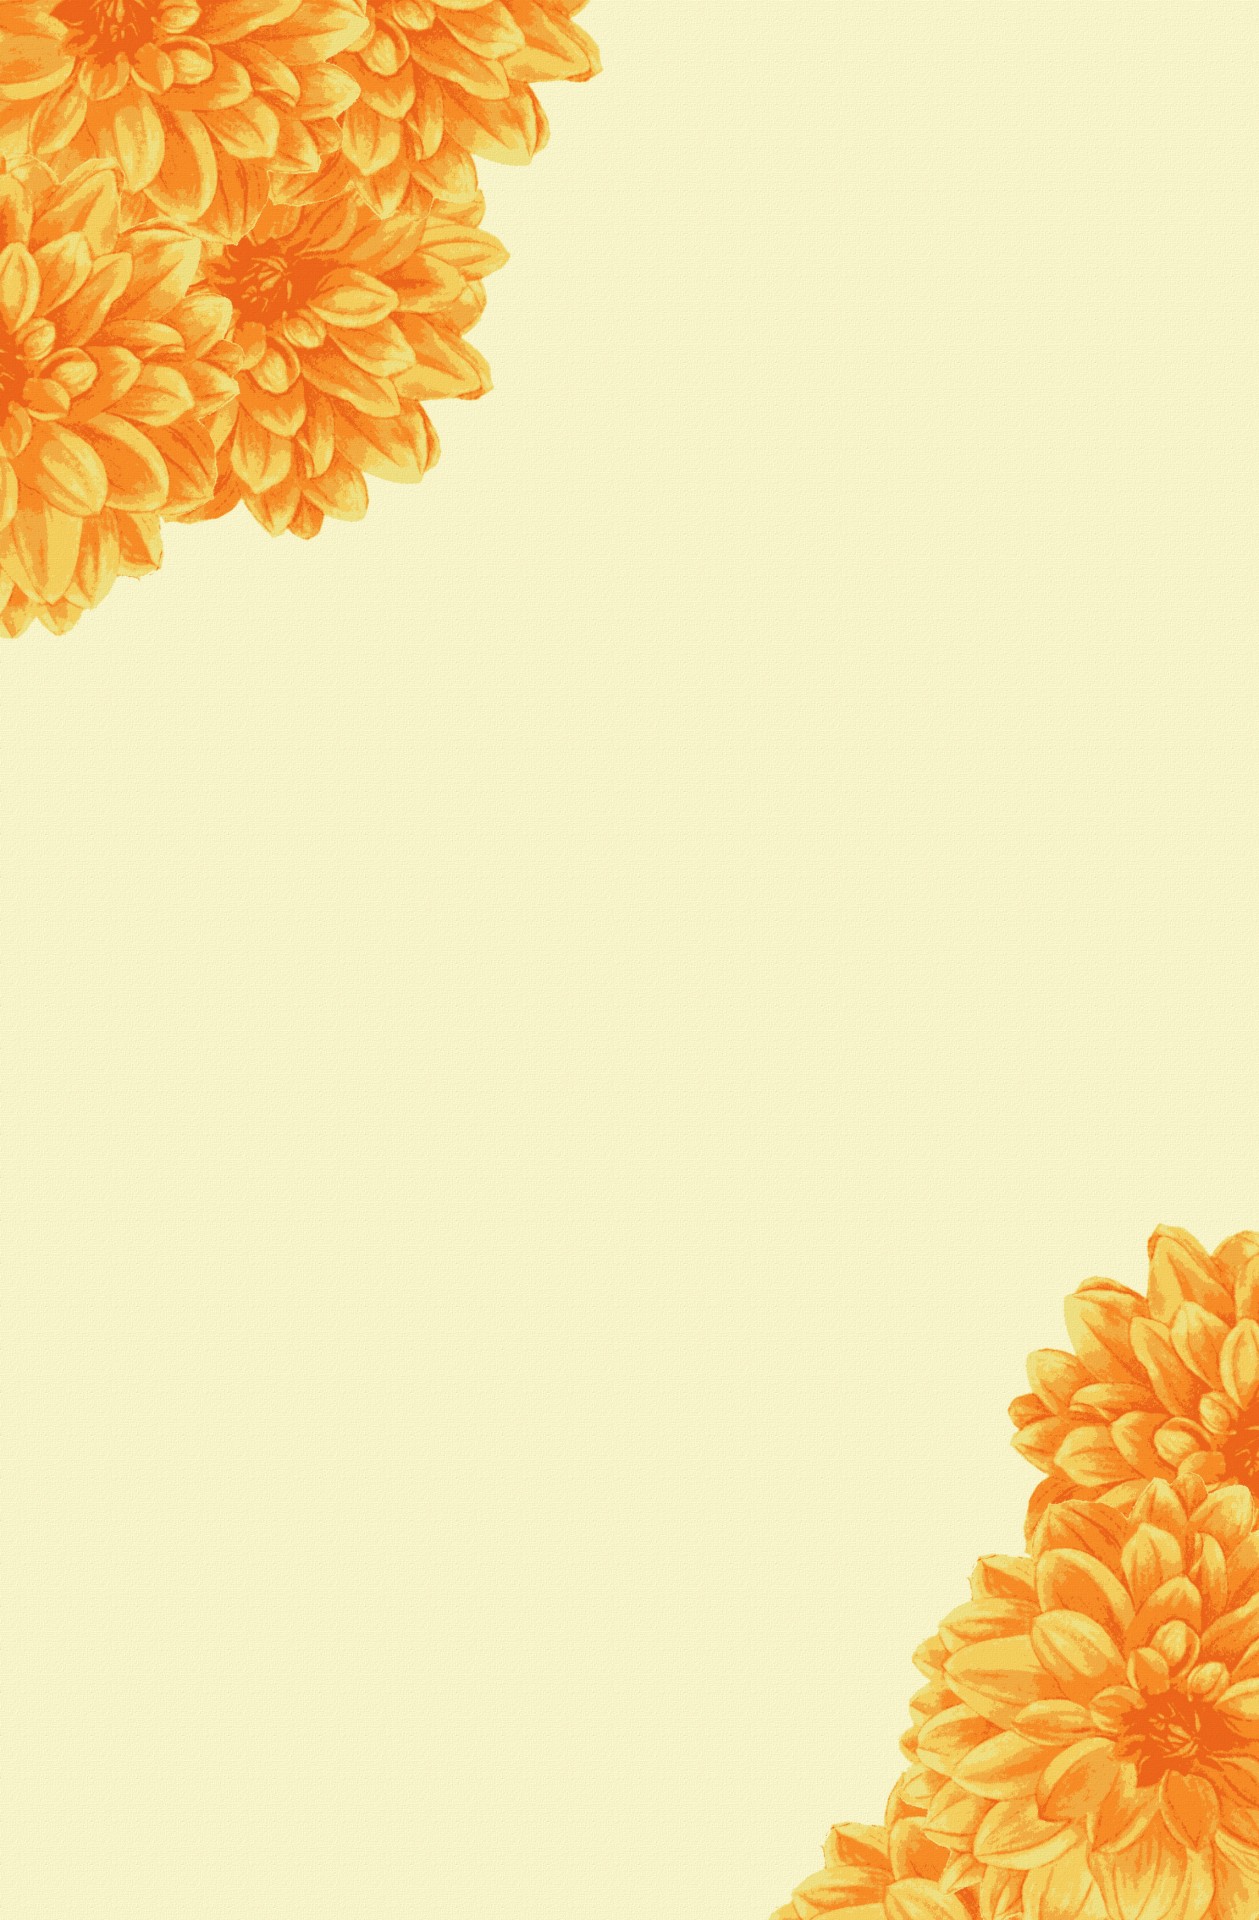 dahlia-flowers-invitation-card-free-stock-photo-public-domain-pictures